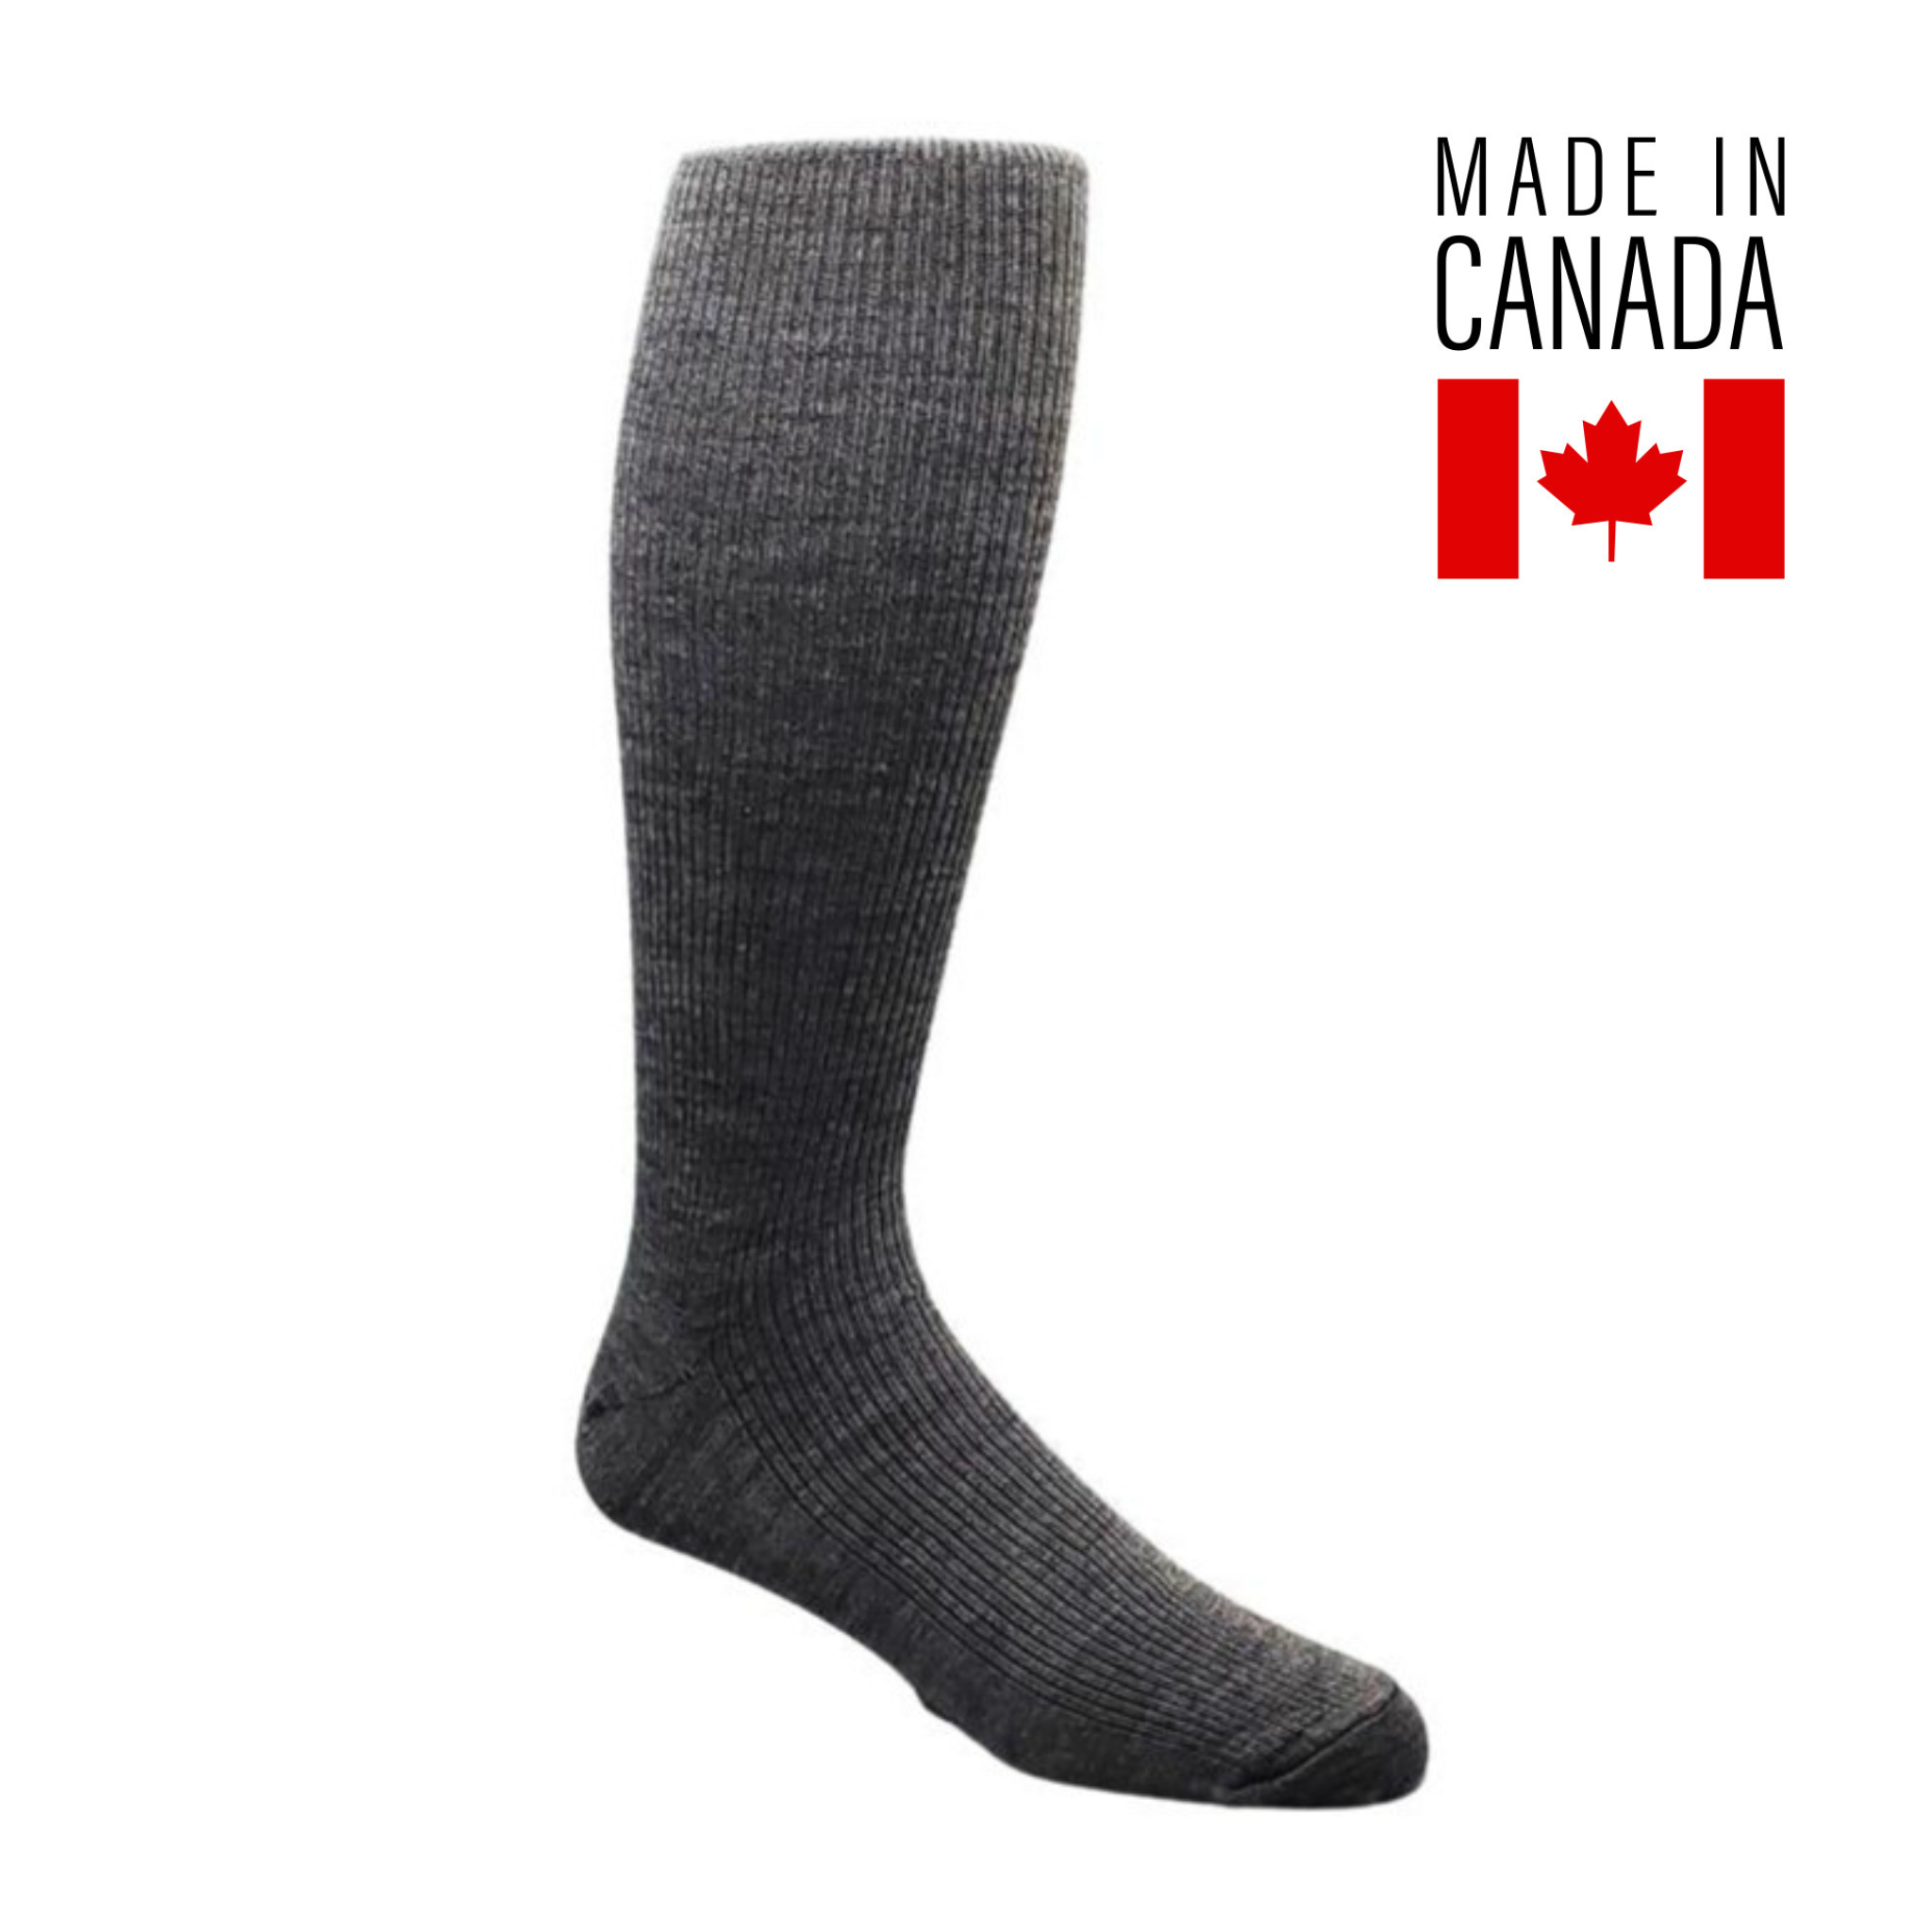 Mens Knee High Work Socks In Canada